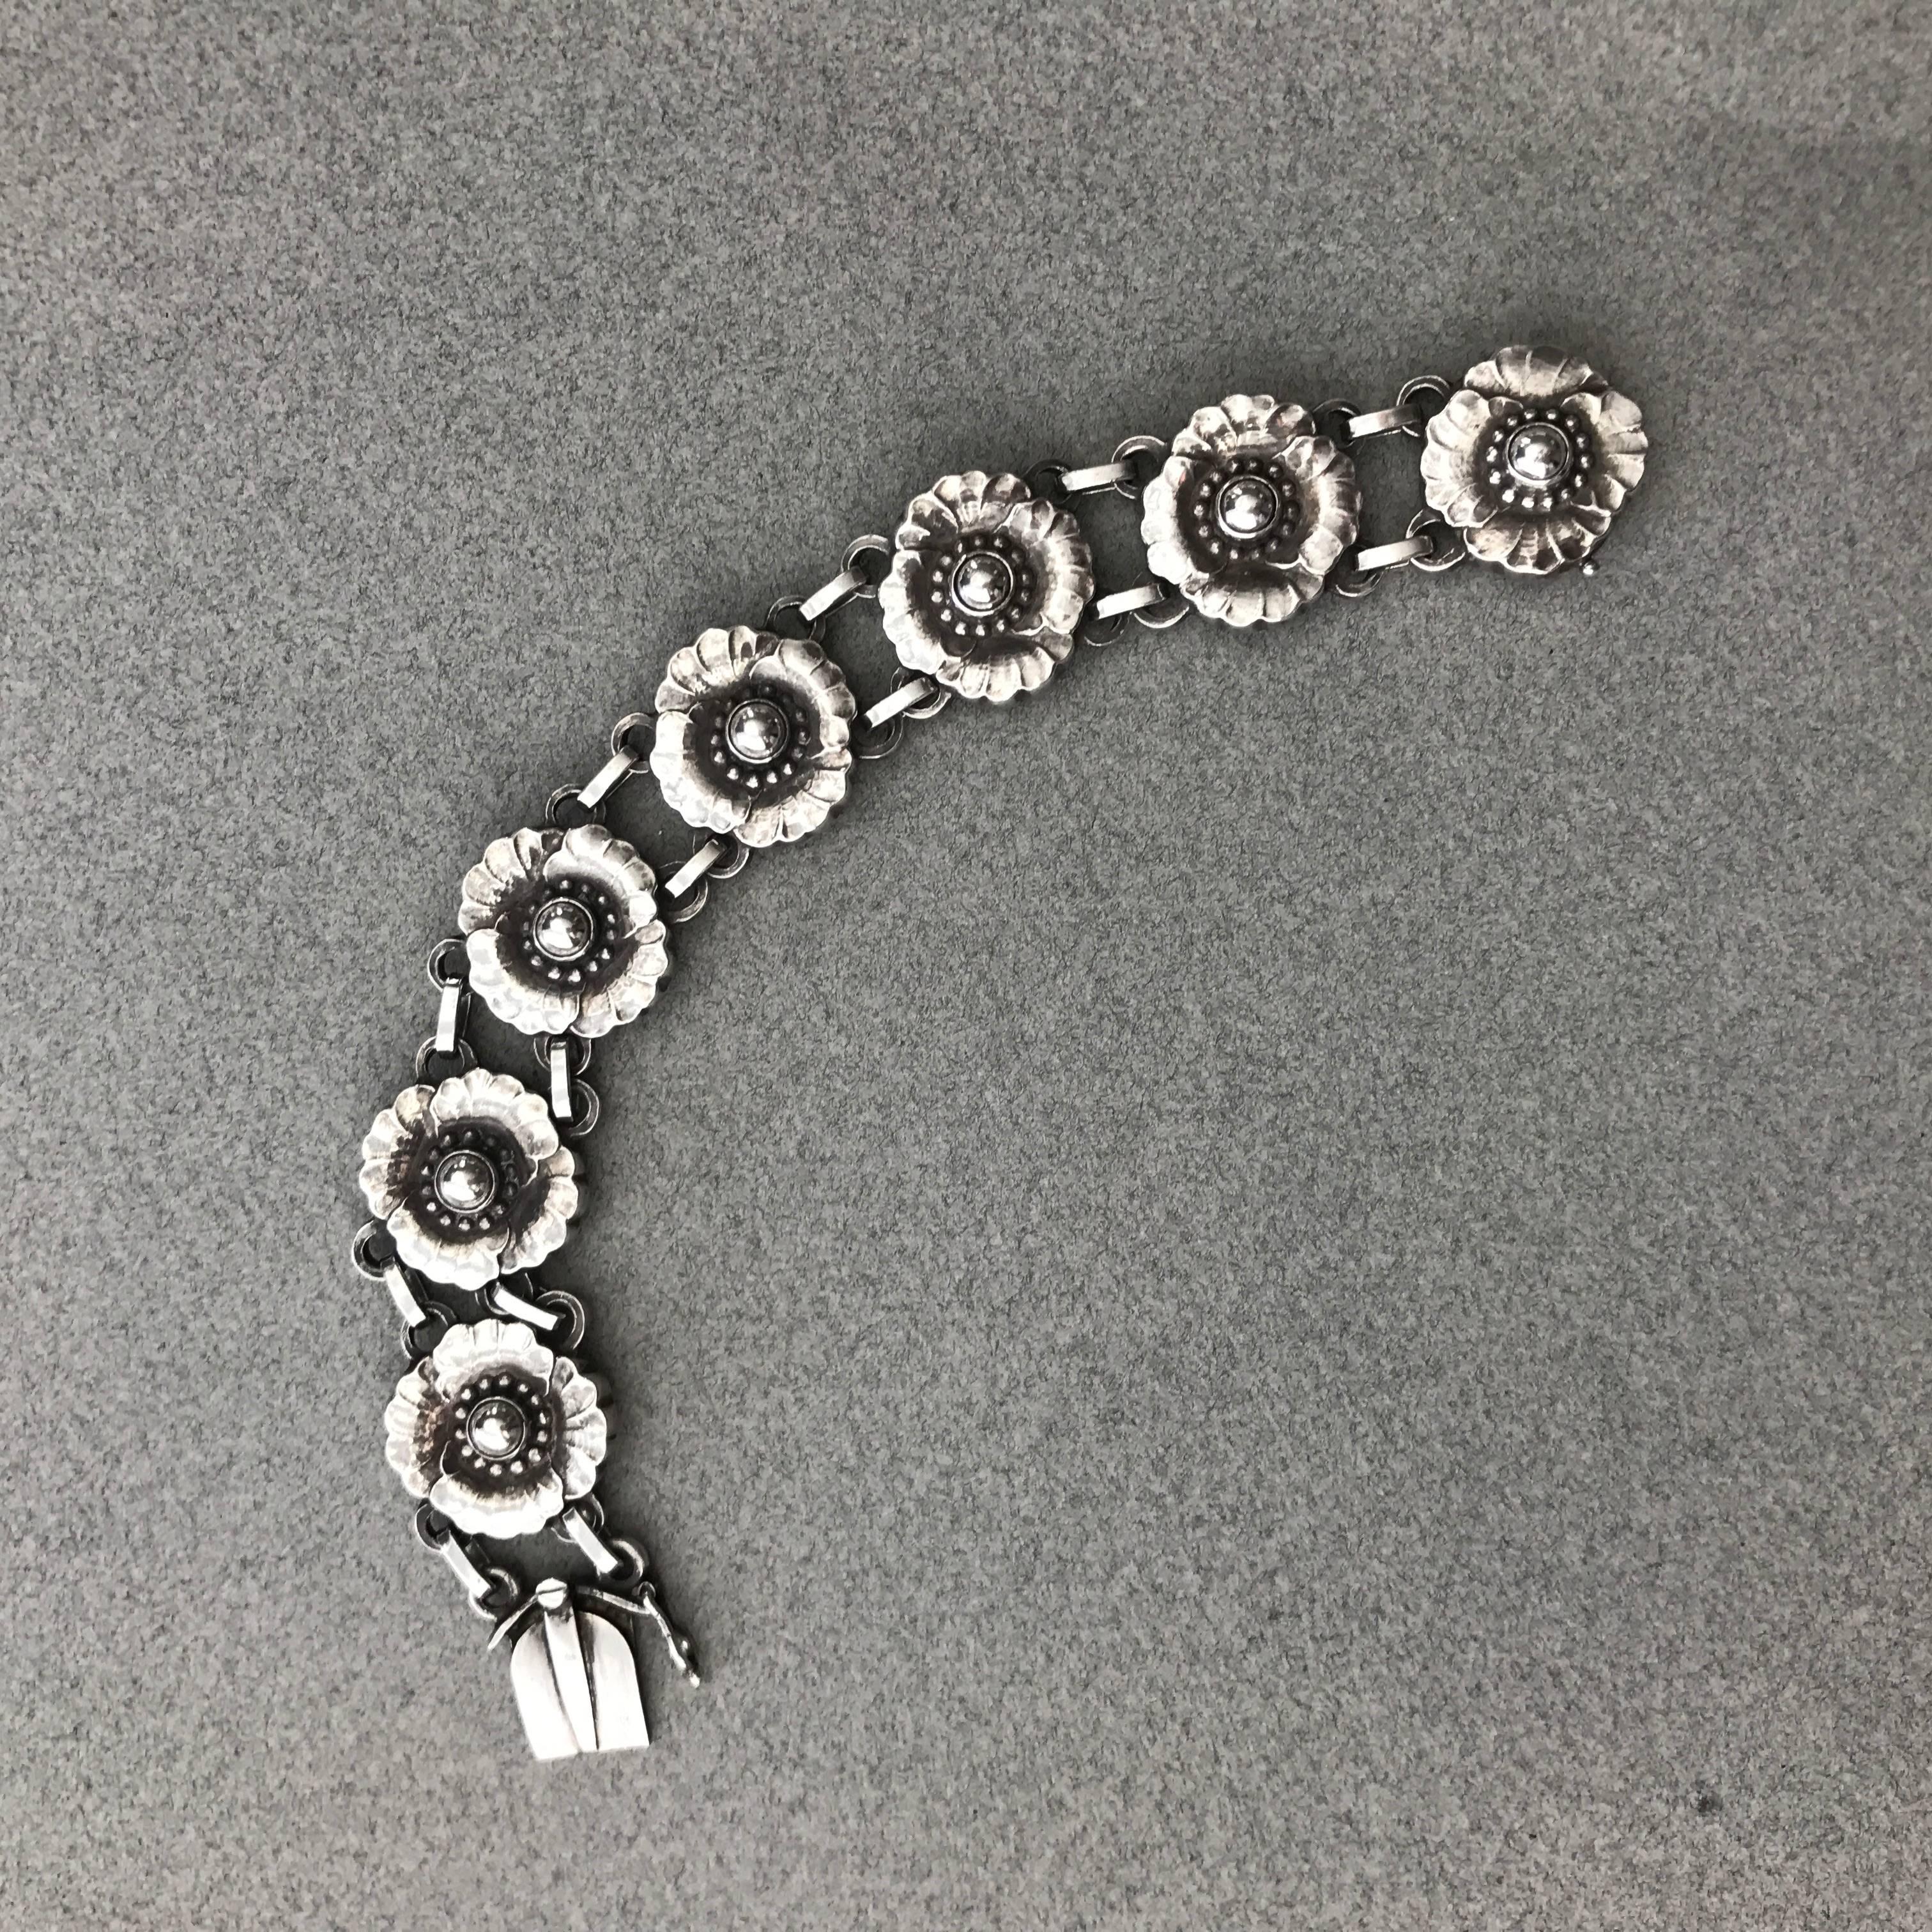 Georg Jensen Sterling Silver Bracelet, No. 36

Dimensions: 6.75